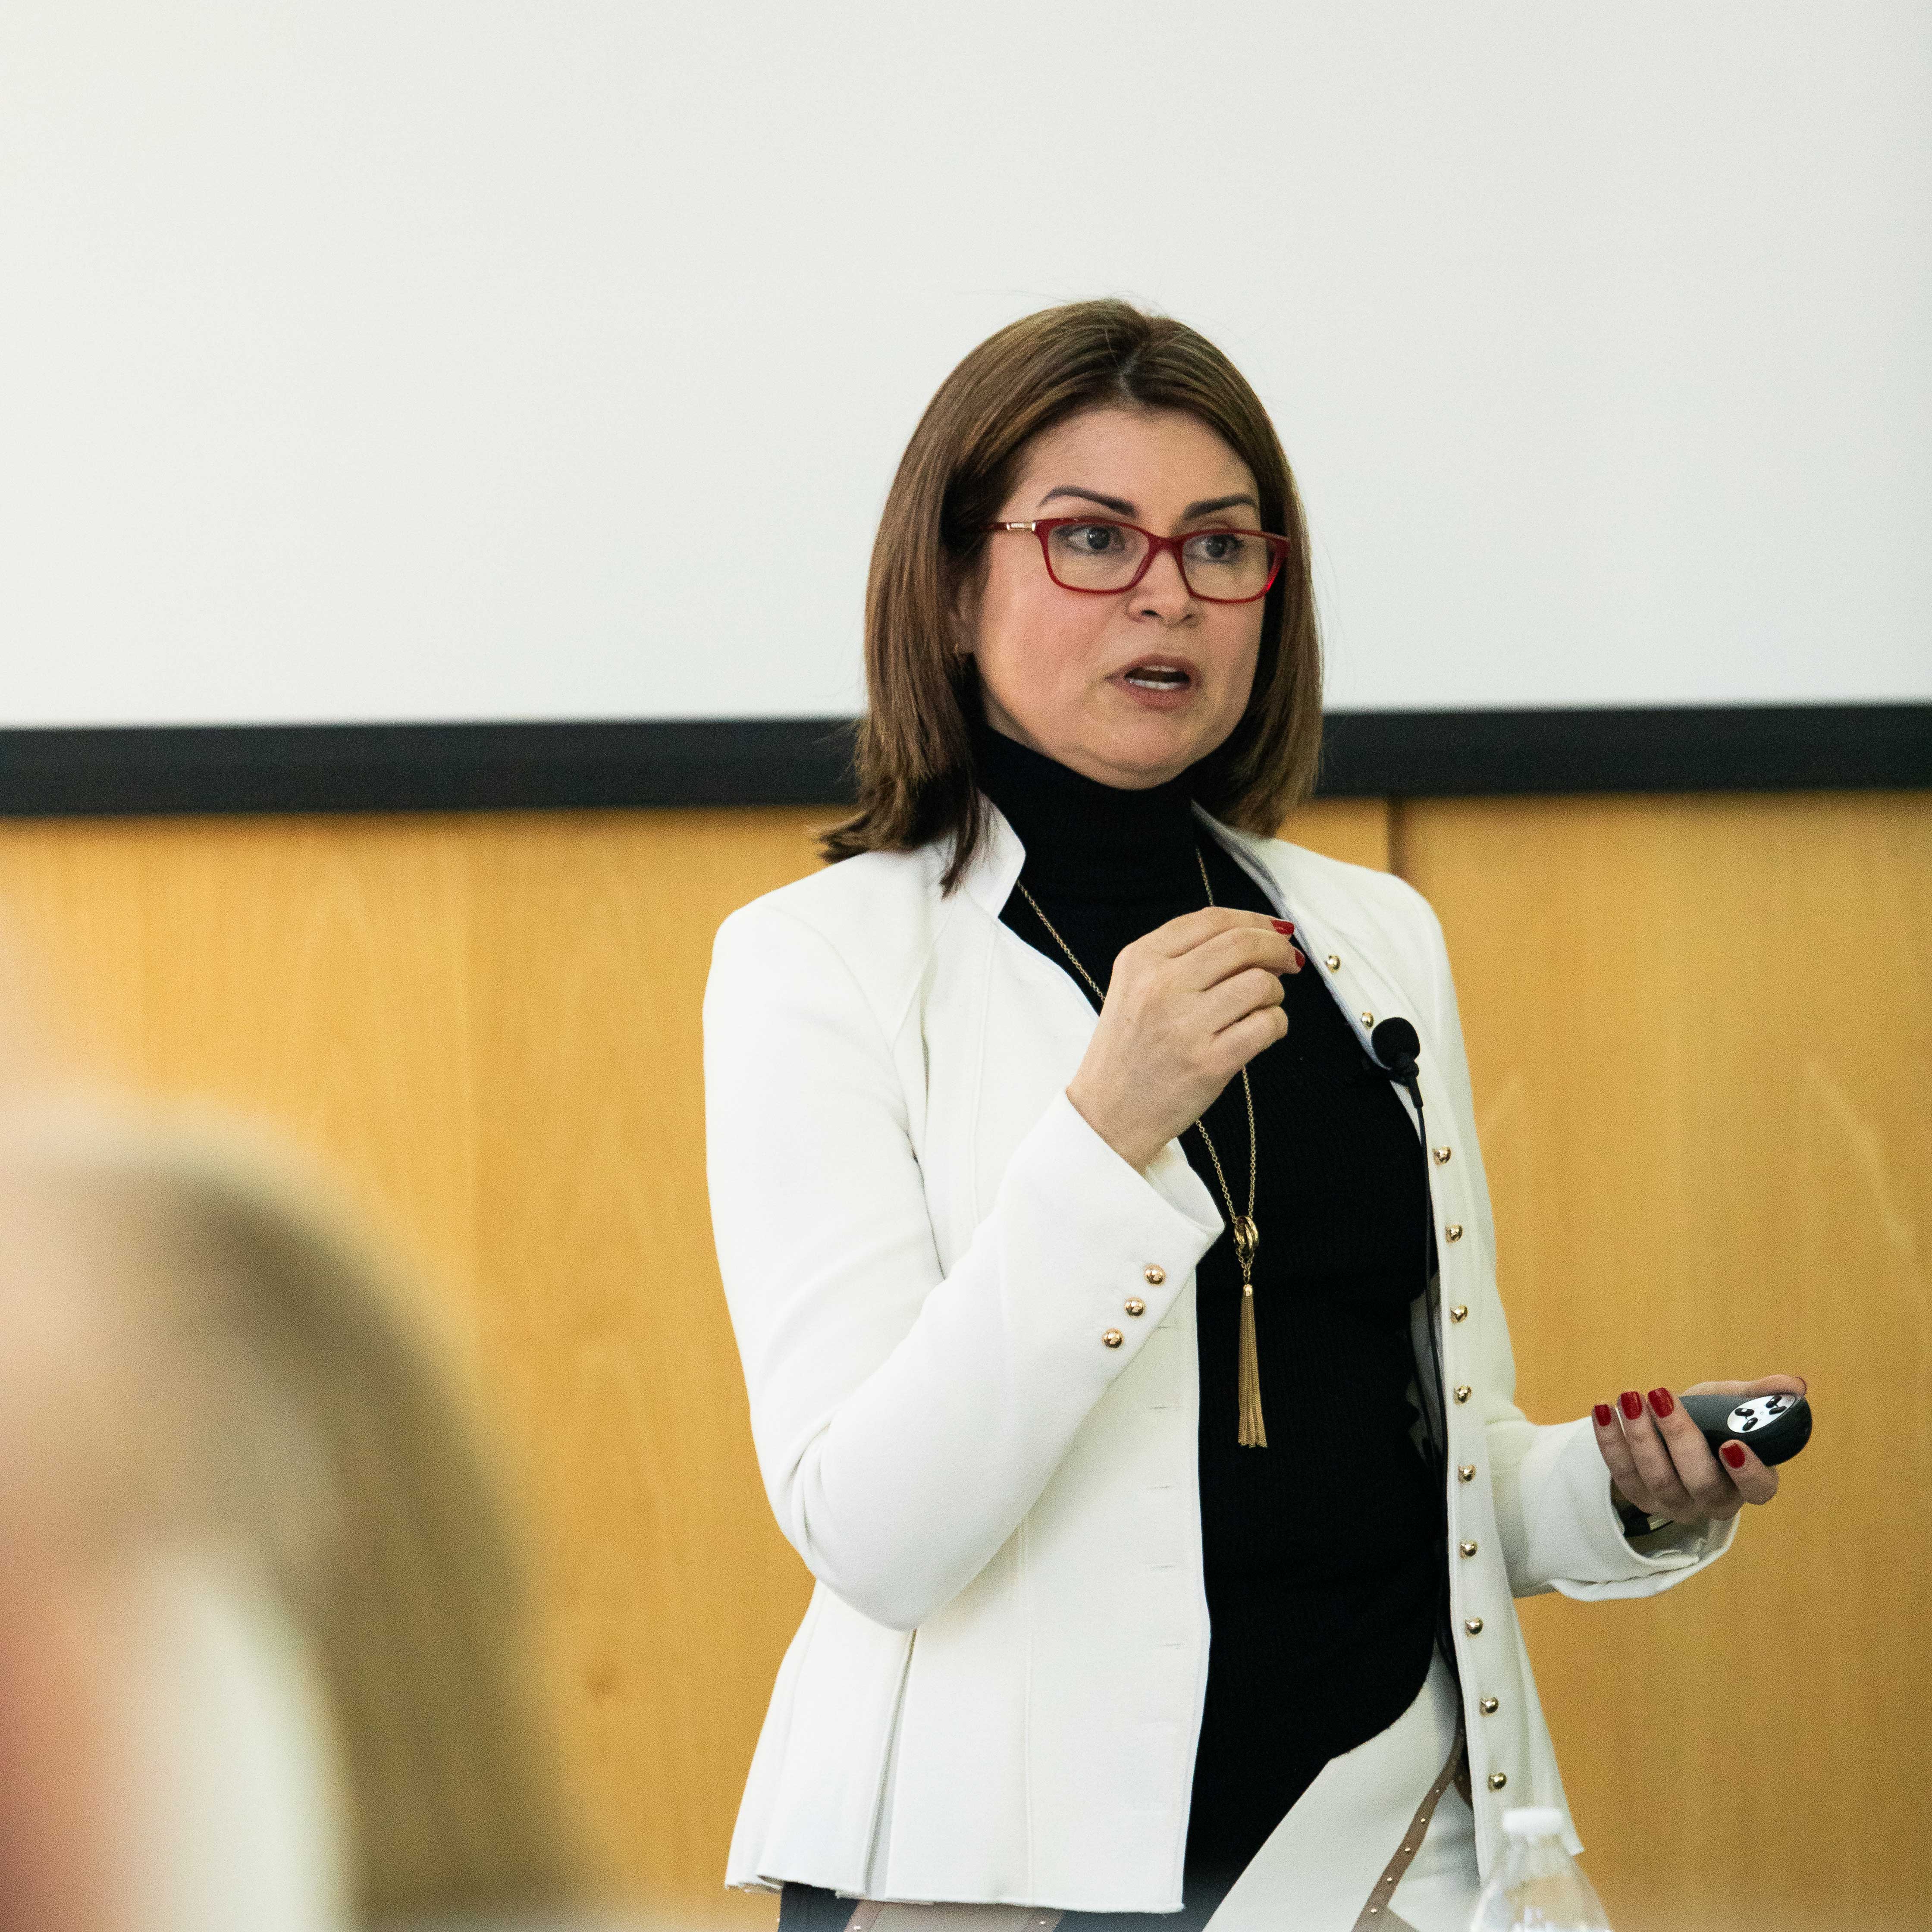 Dr. Zelia Correa speaking during a presentation